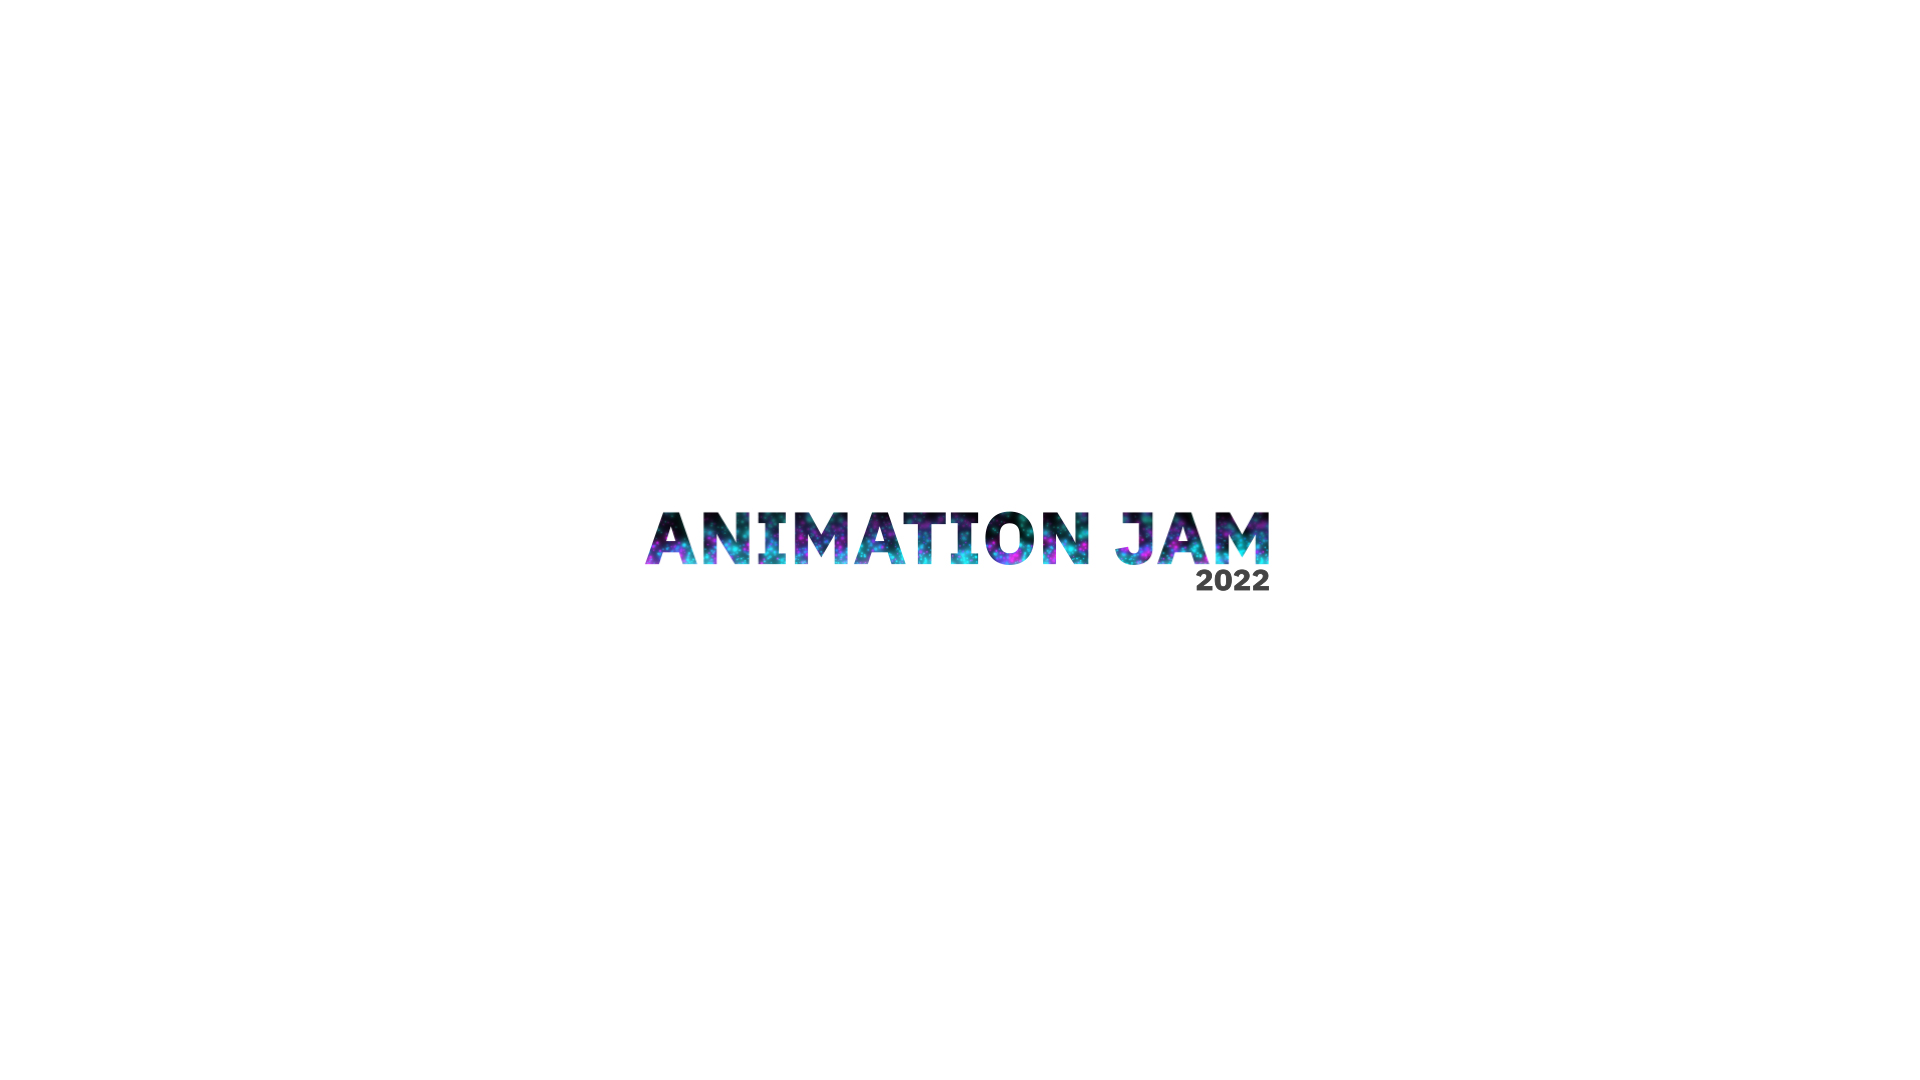 Event: AnimationJam 2022